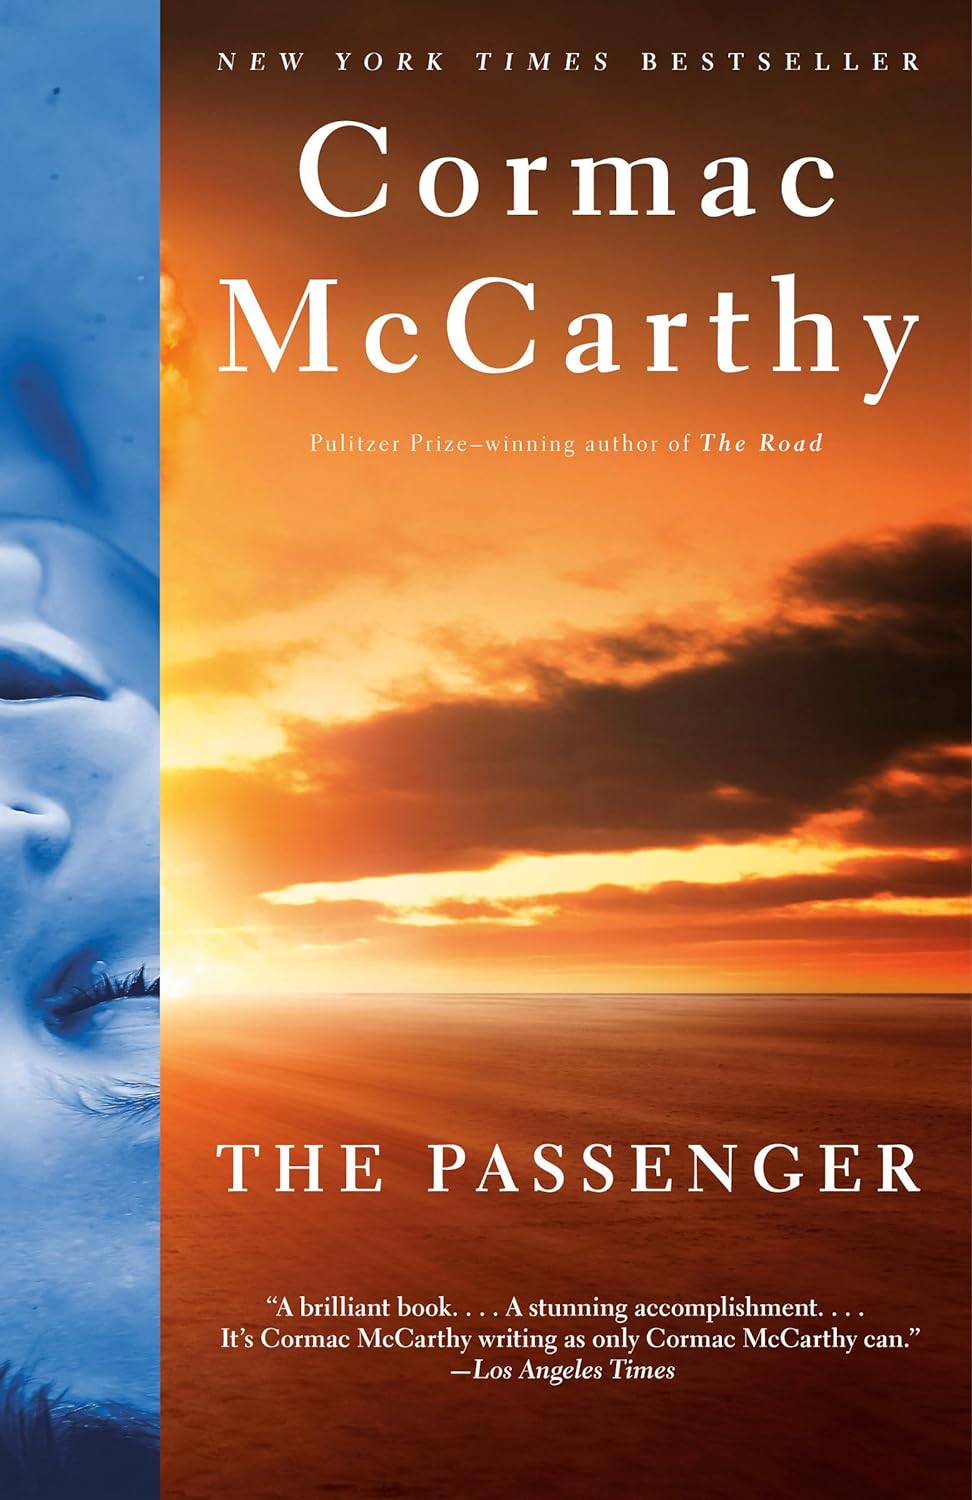 The Passenger: A Novel by Cormac McCarthy